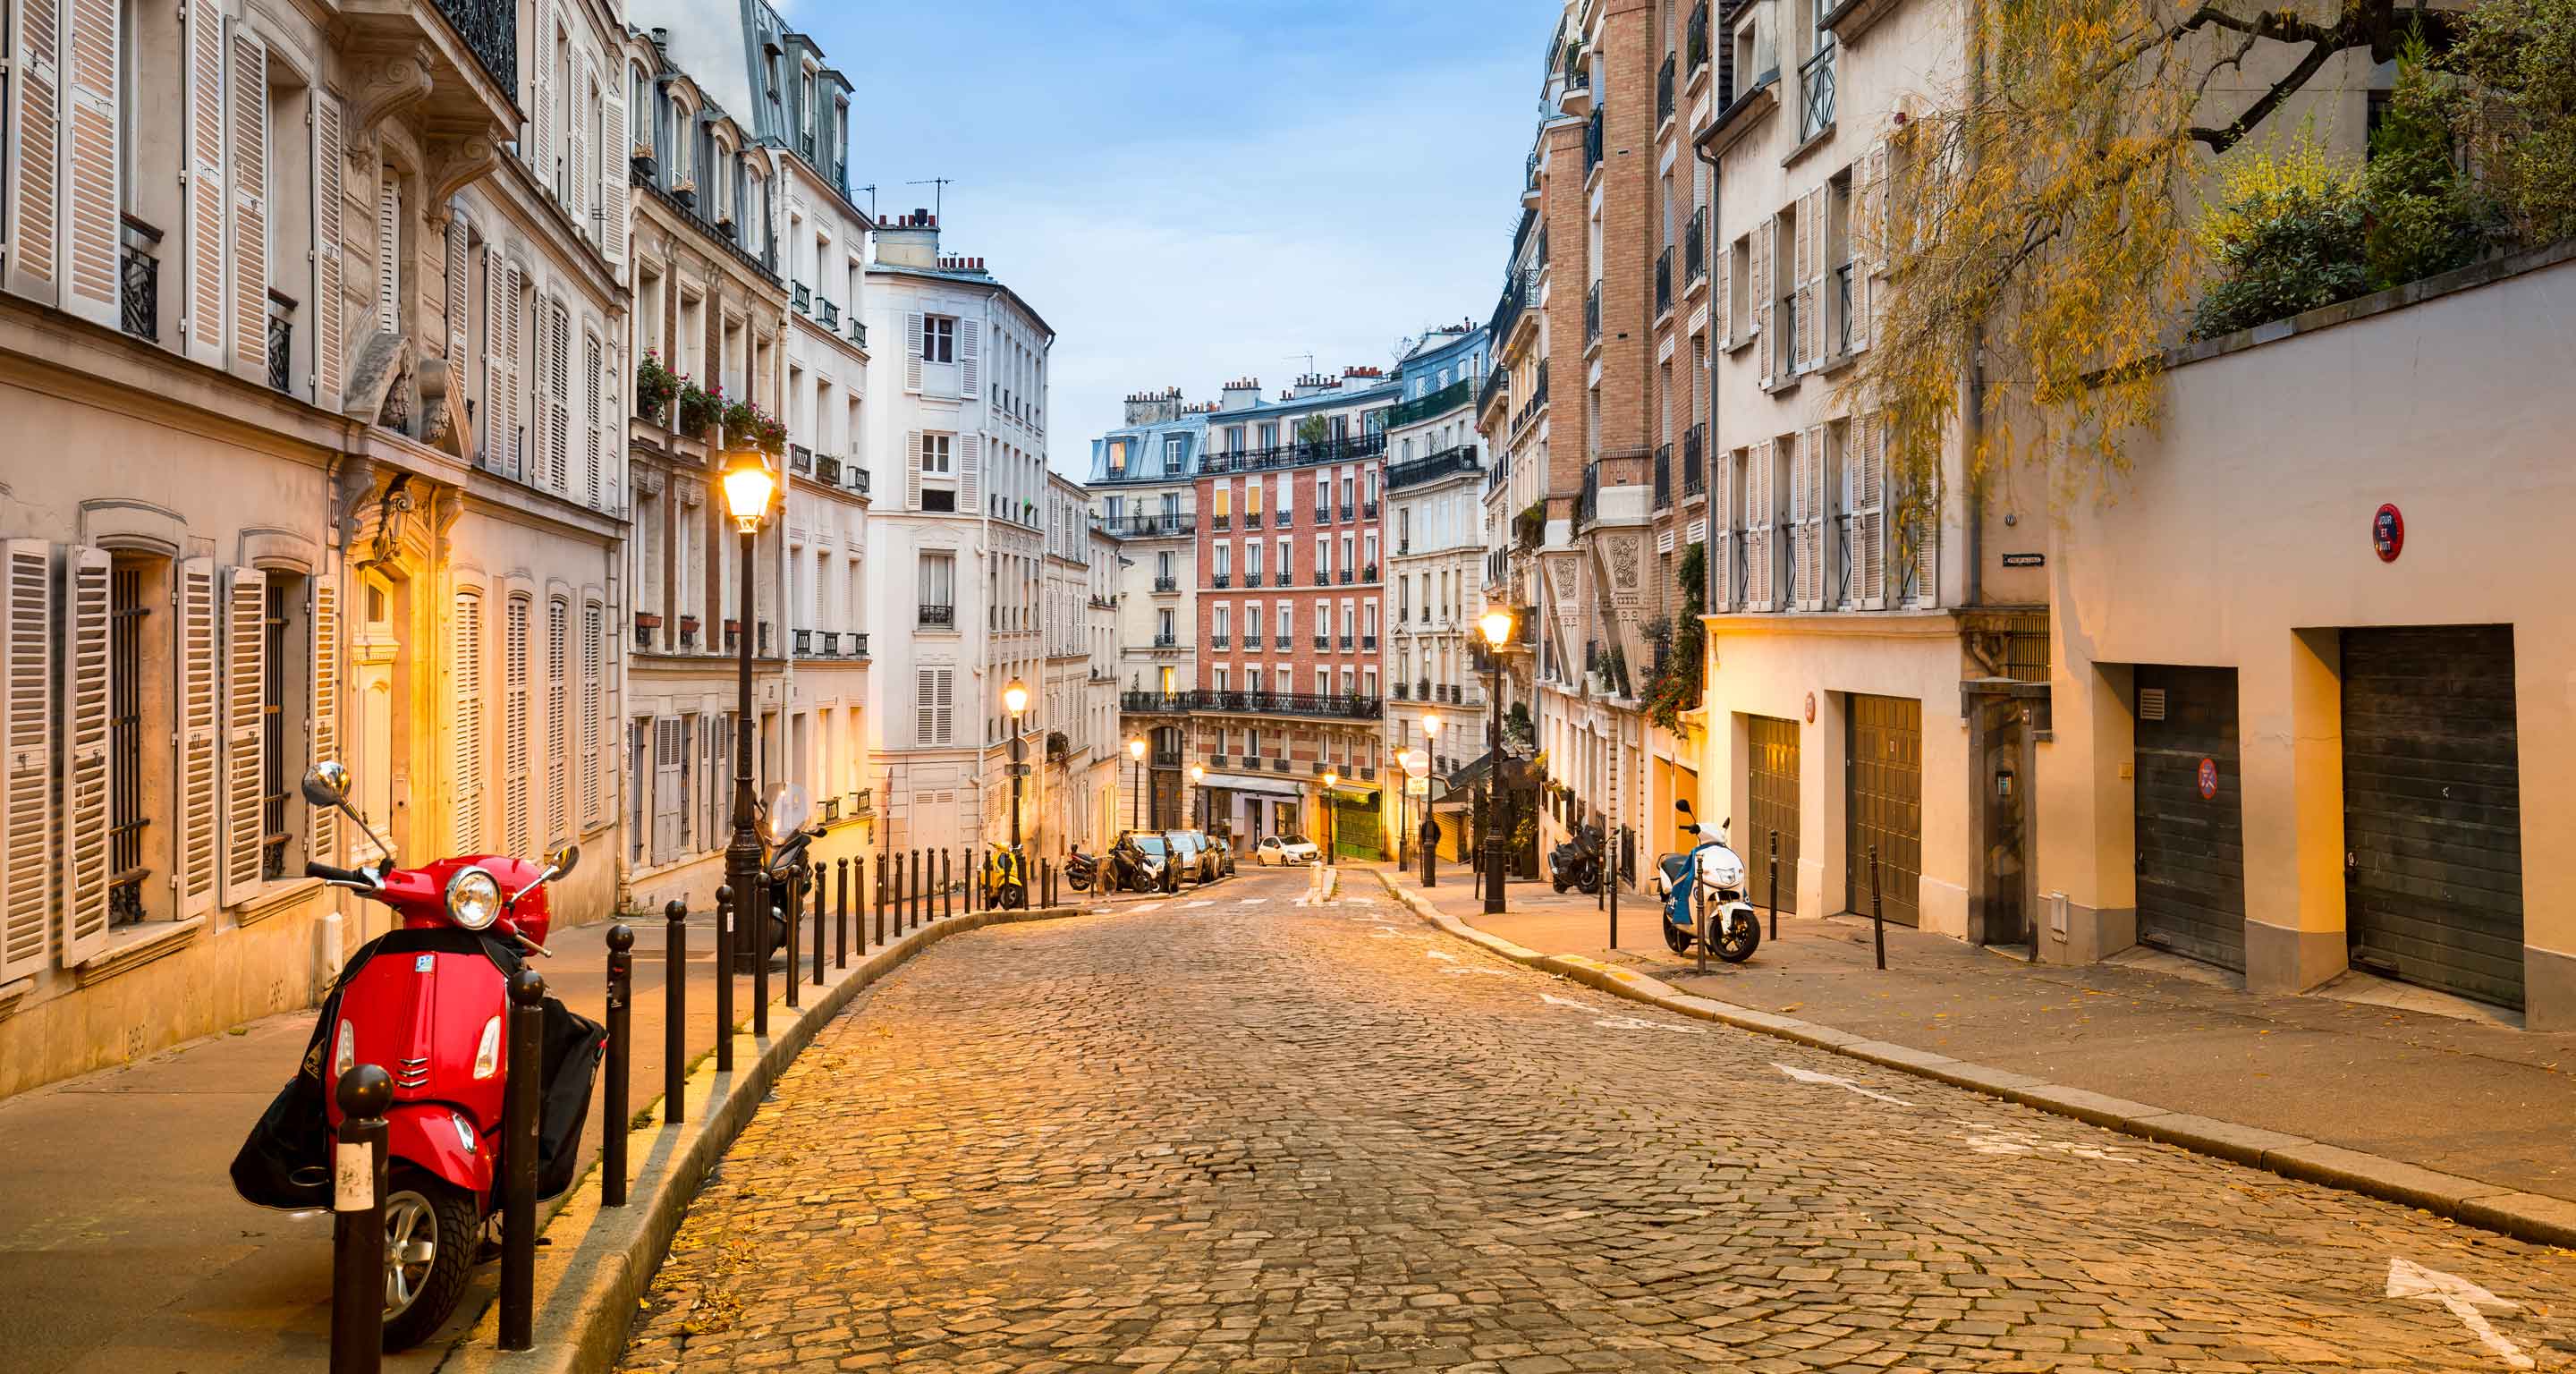 Winding street in Montmartre.